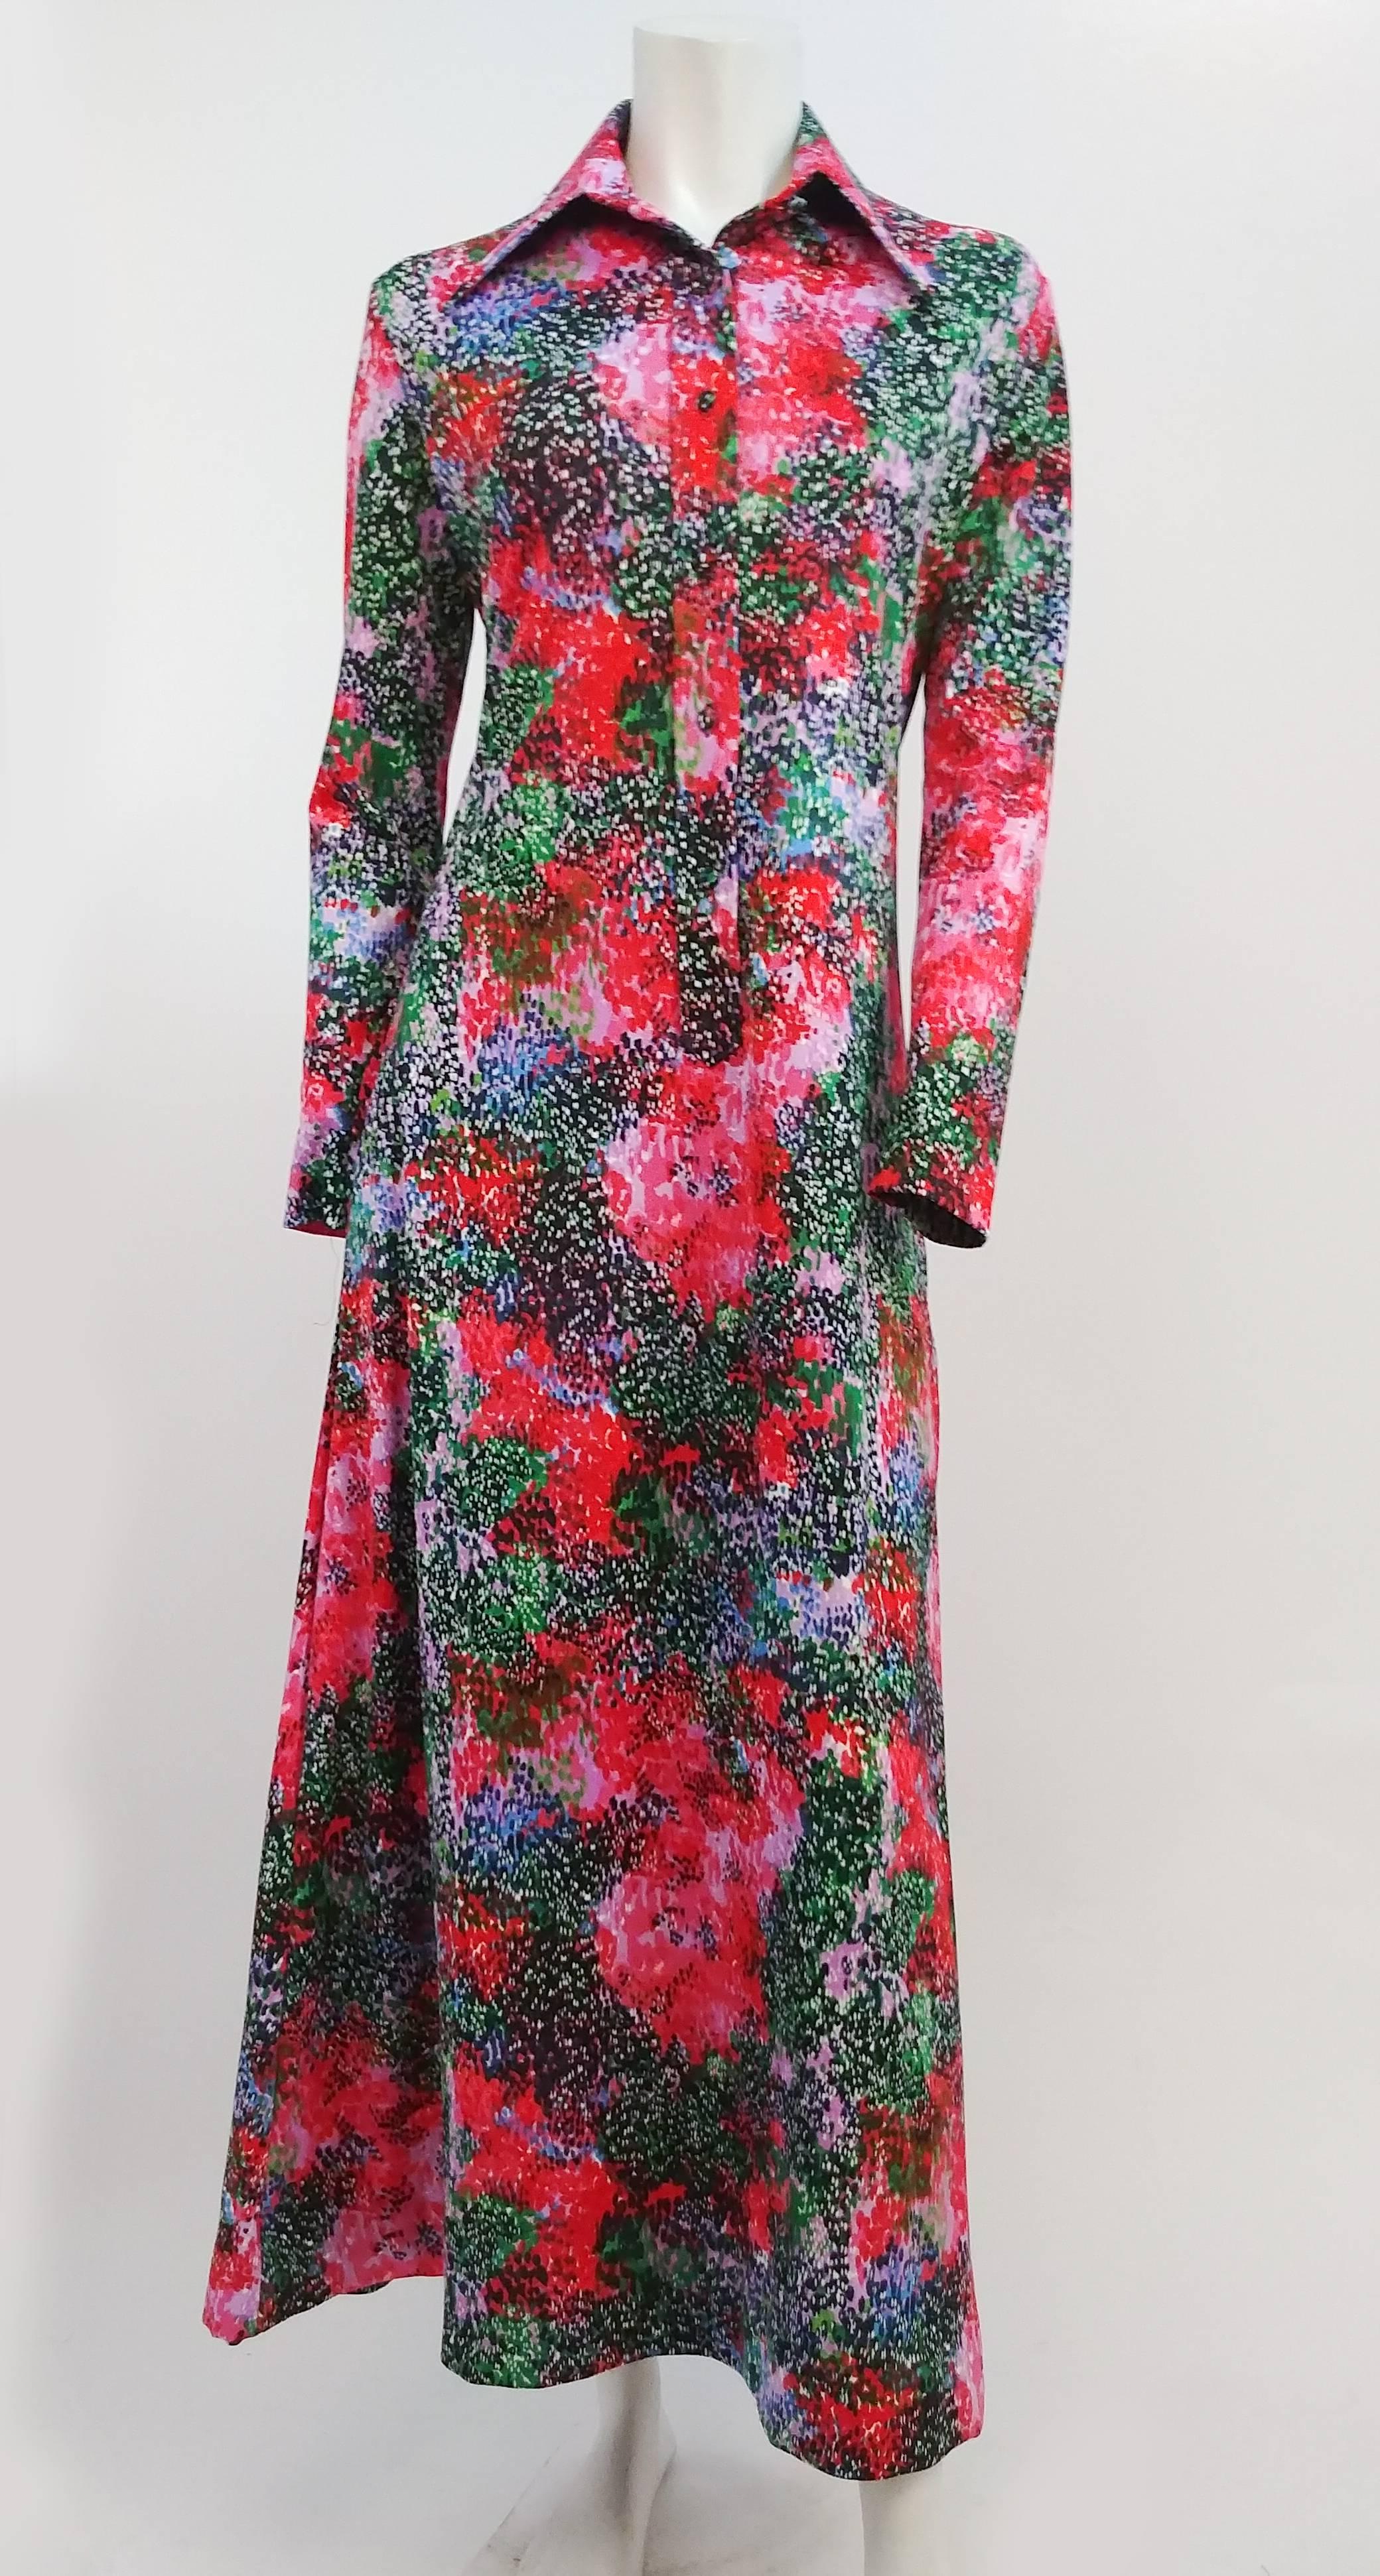 1970s Lanvin Printed Maxi Dress. Printed jersey fabric. Has inseam pockets. Belt unoriginal. 